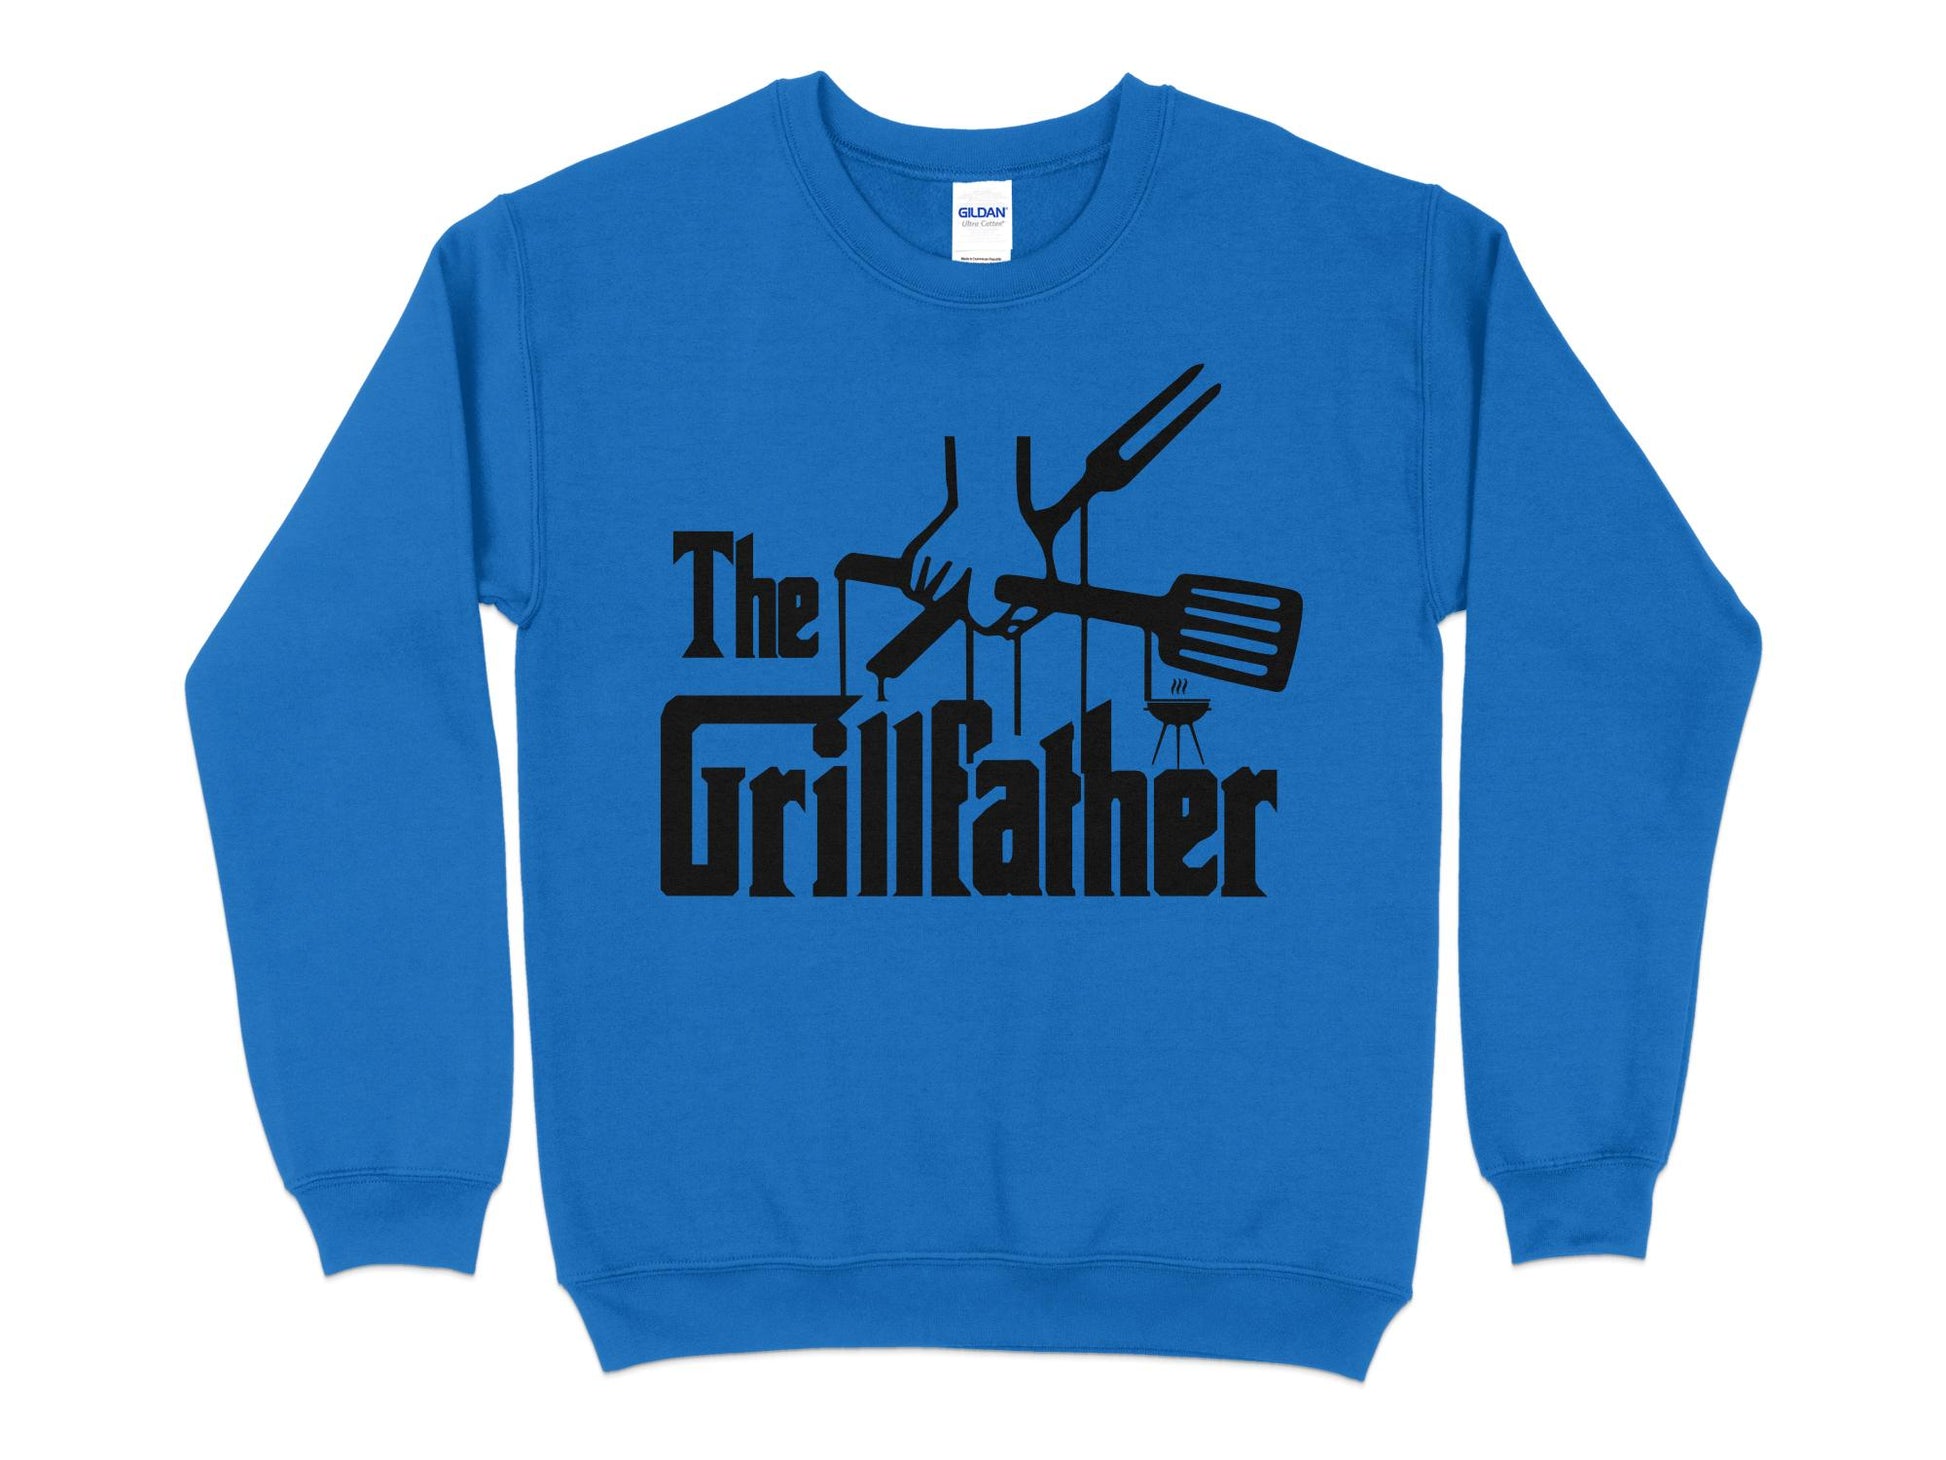 Grillfather Sweatshirt, sizing chart, royal blue